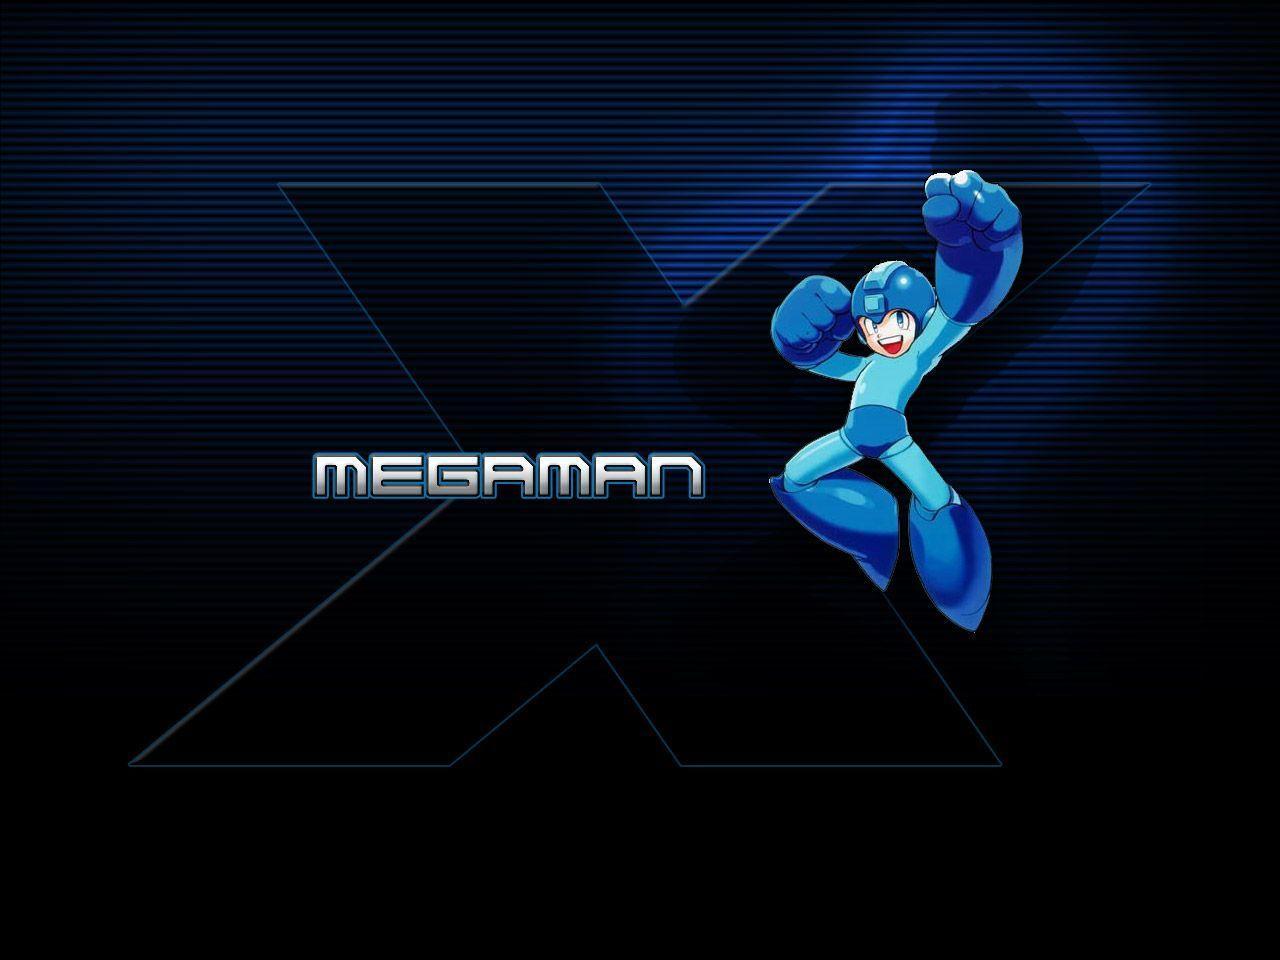 Mega man